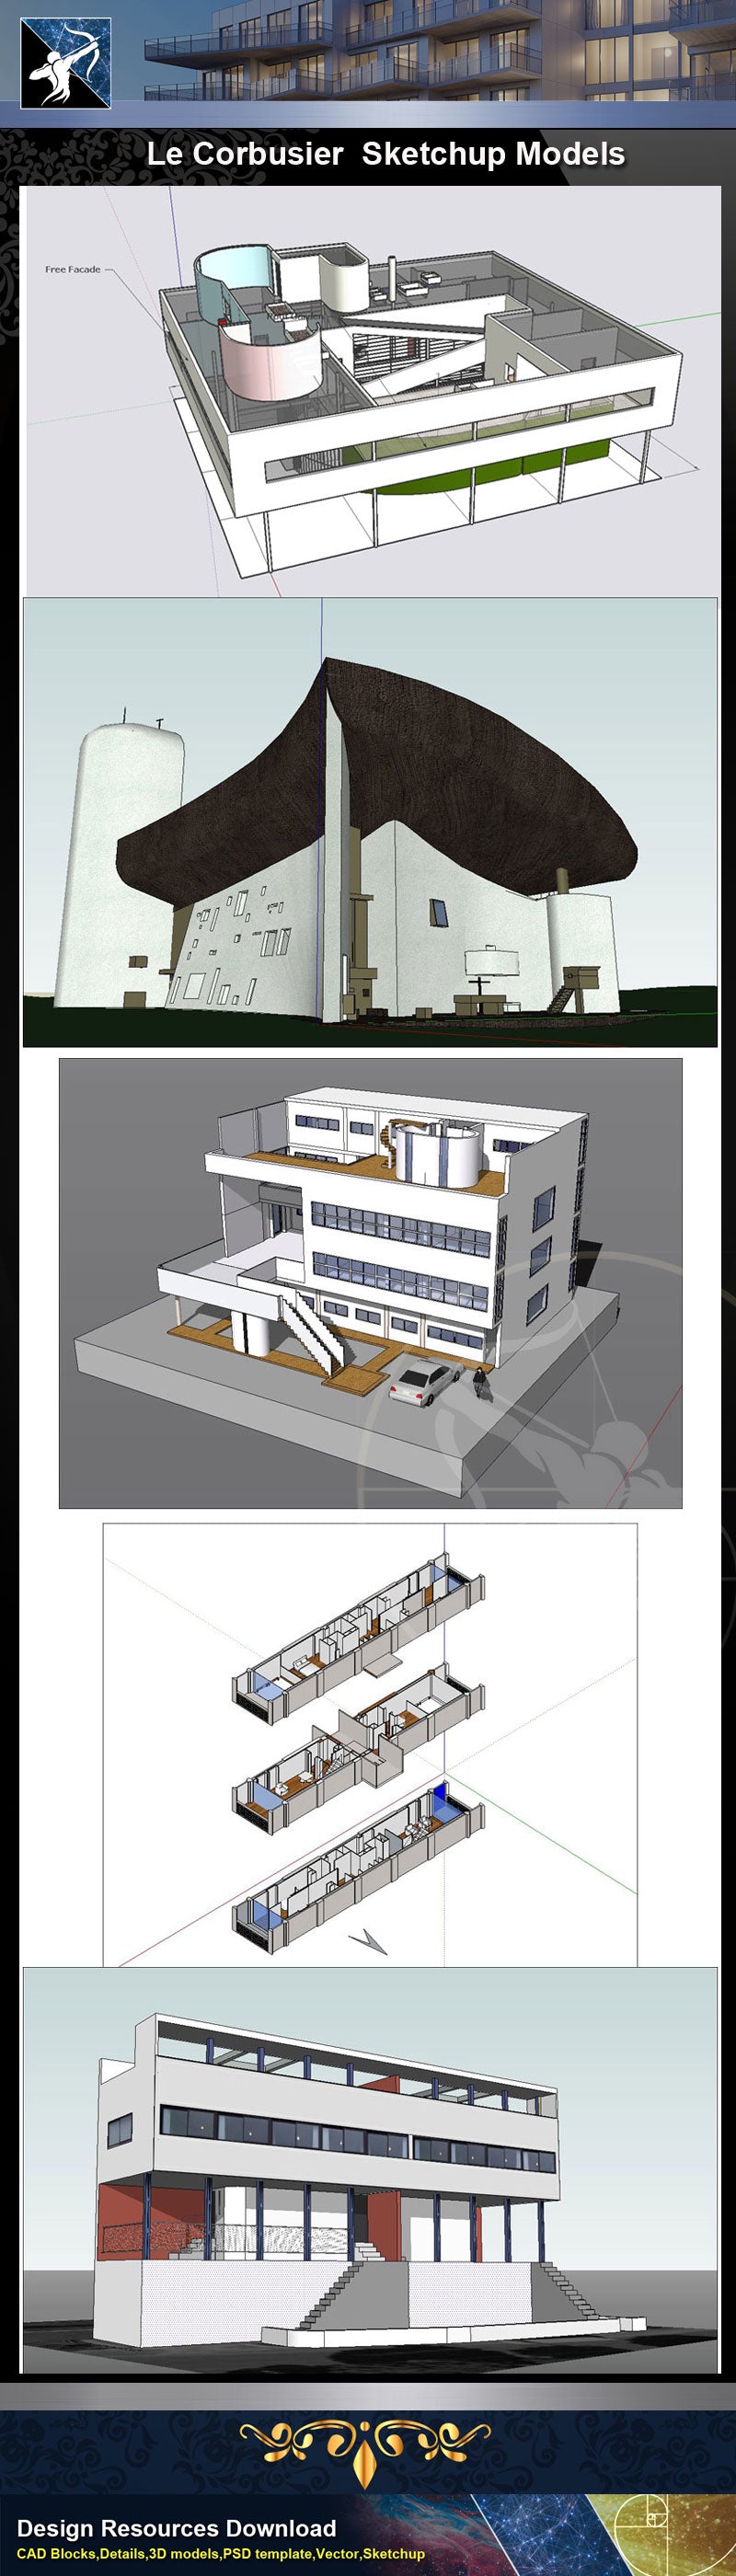 ★★Total 107 Pritzker Architecture Sketchup 3D Models★ (Best Recommanded!!)